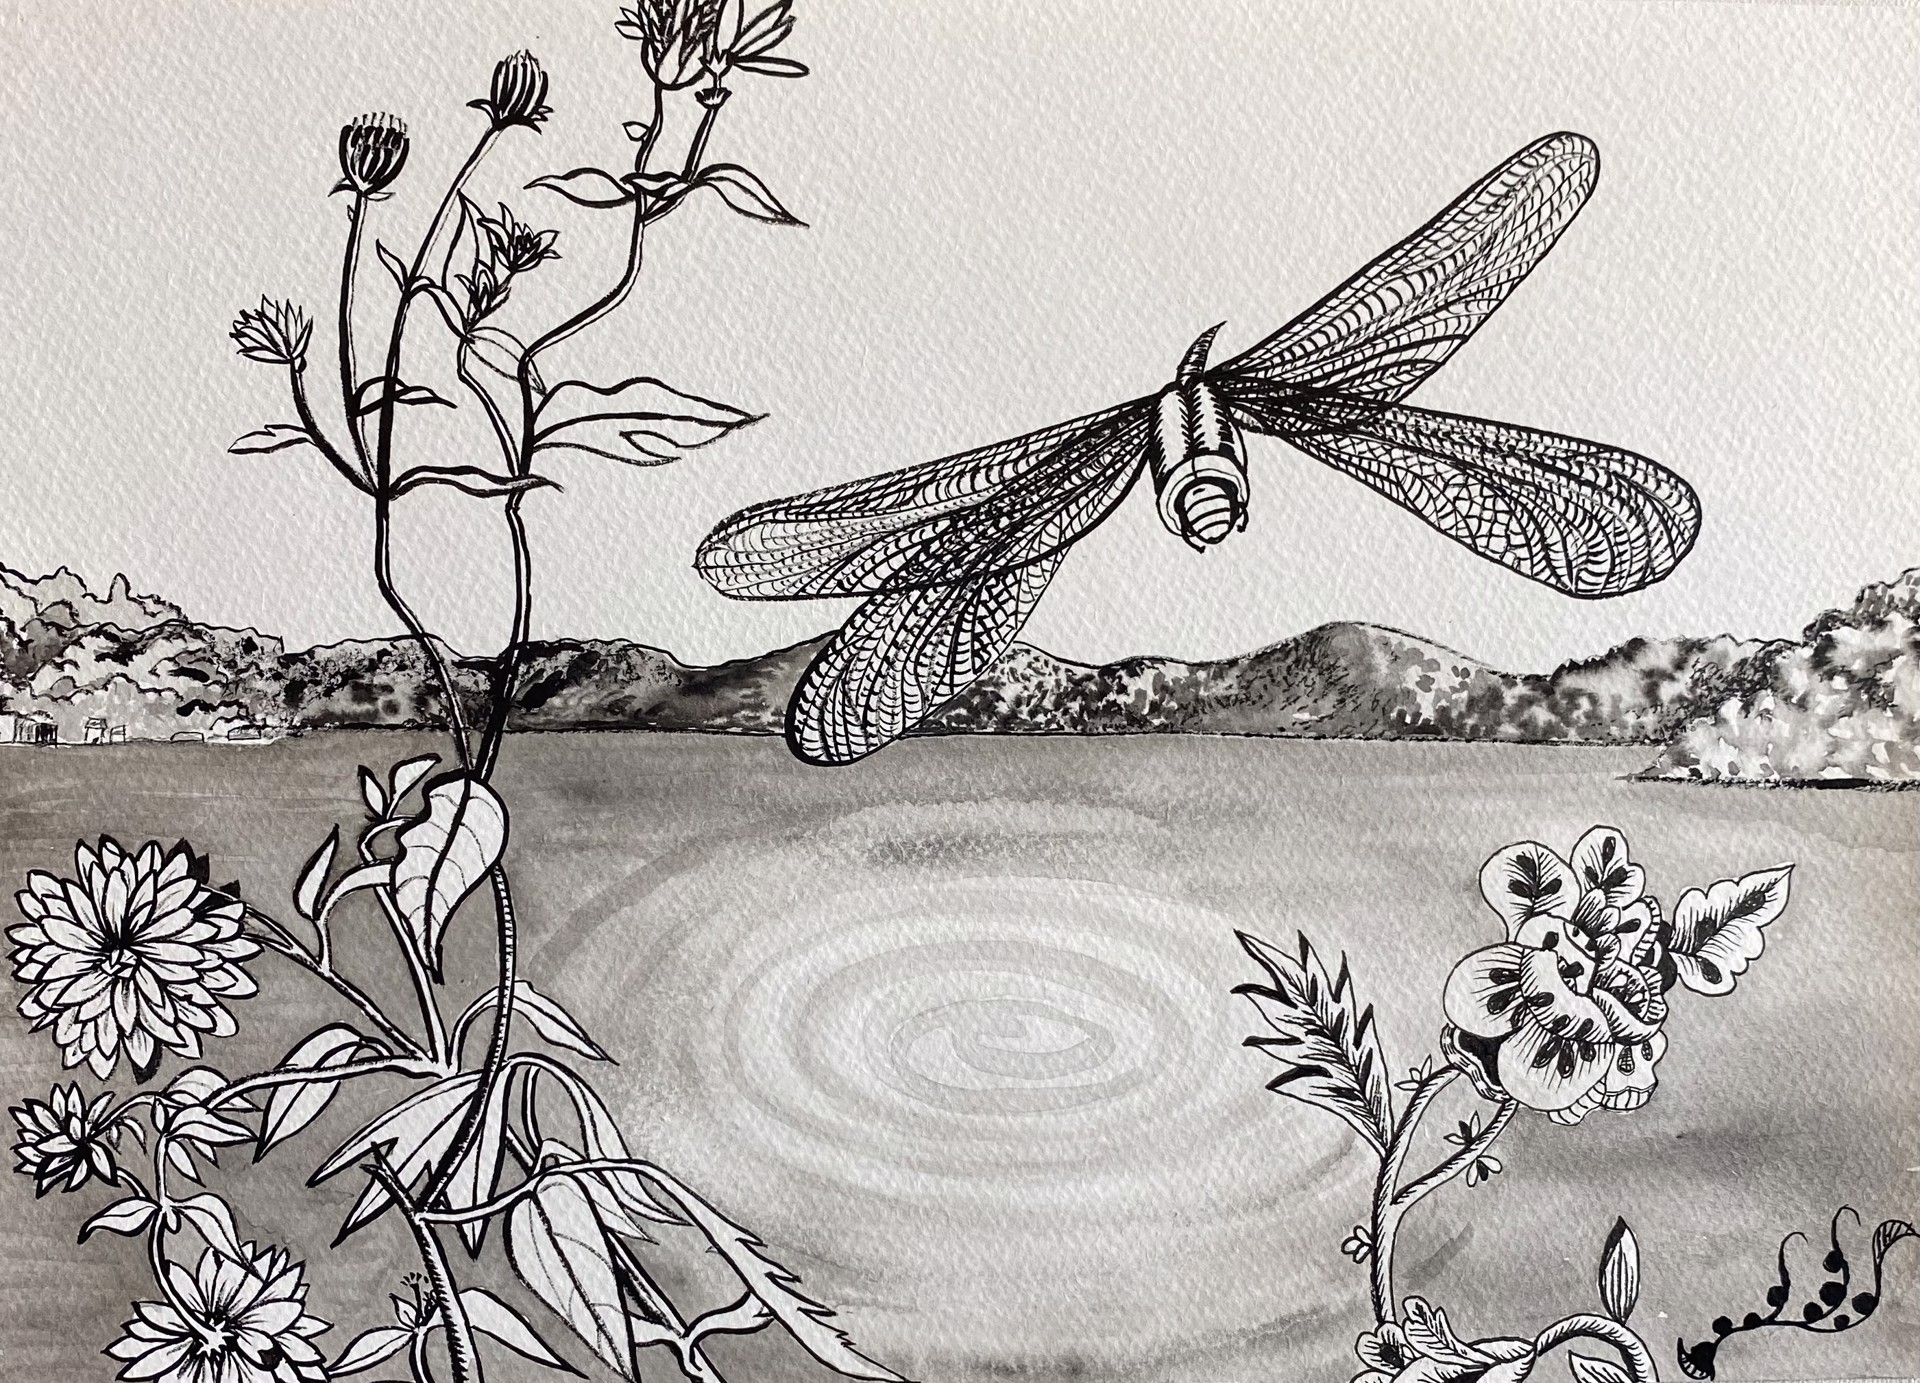 Dragonfly by Jill Slaymaker